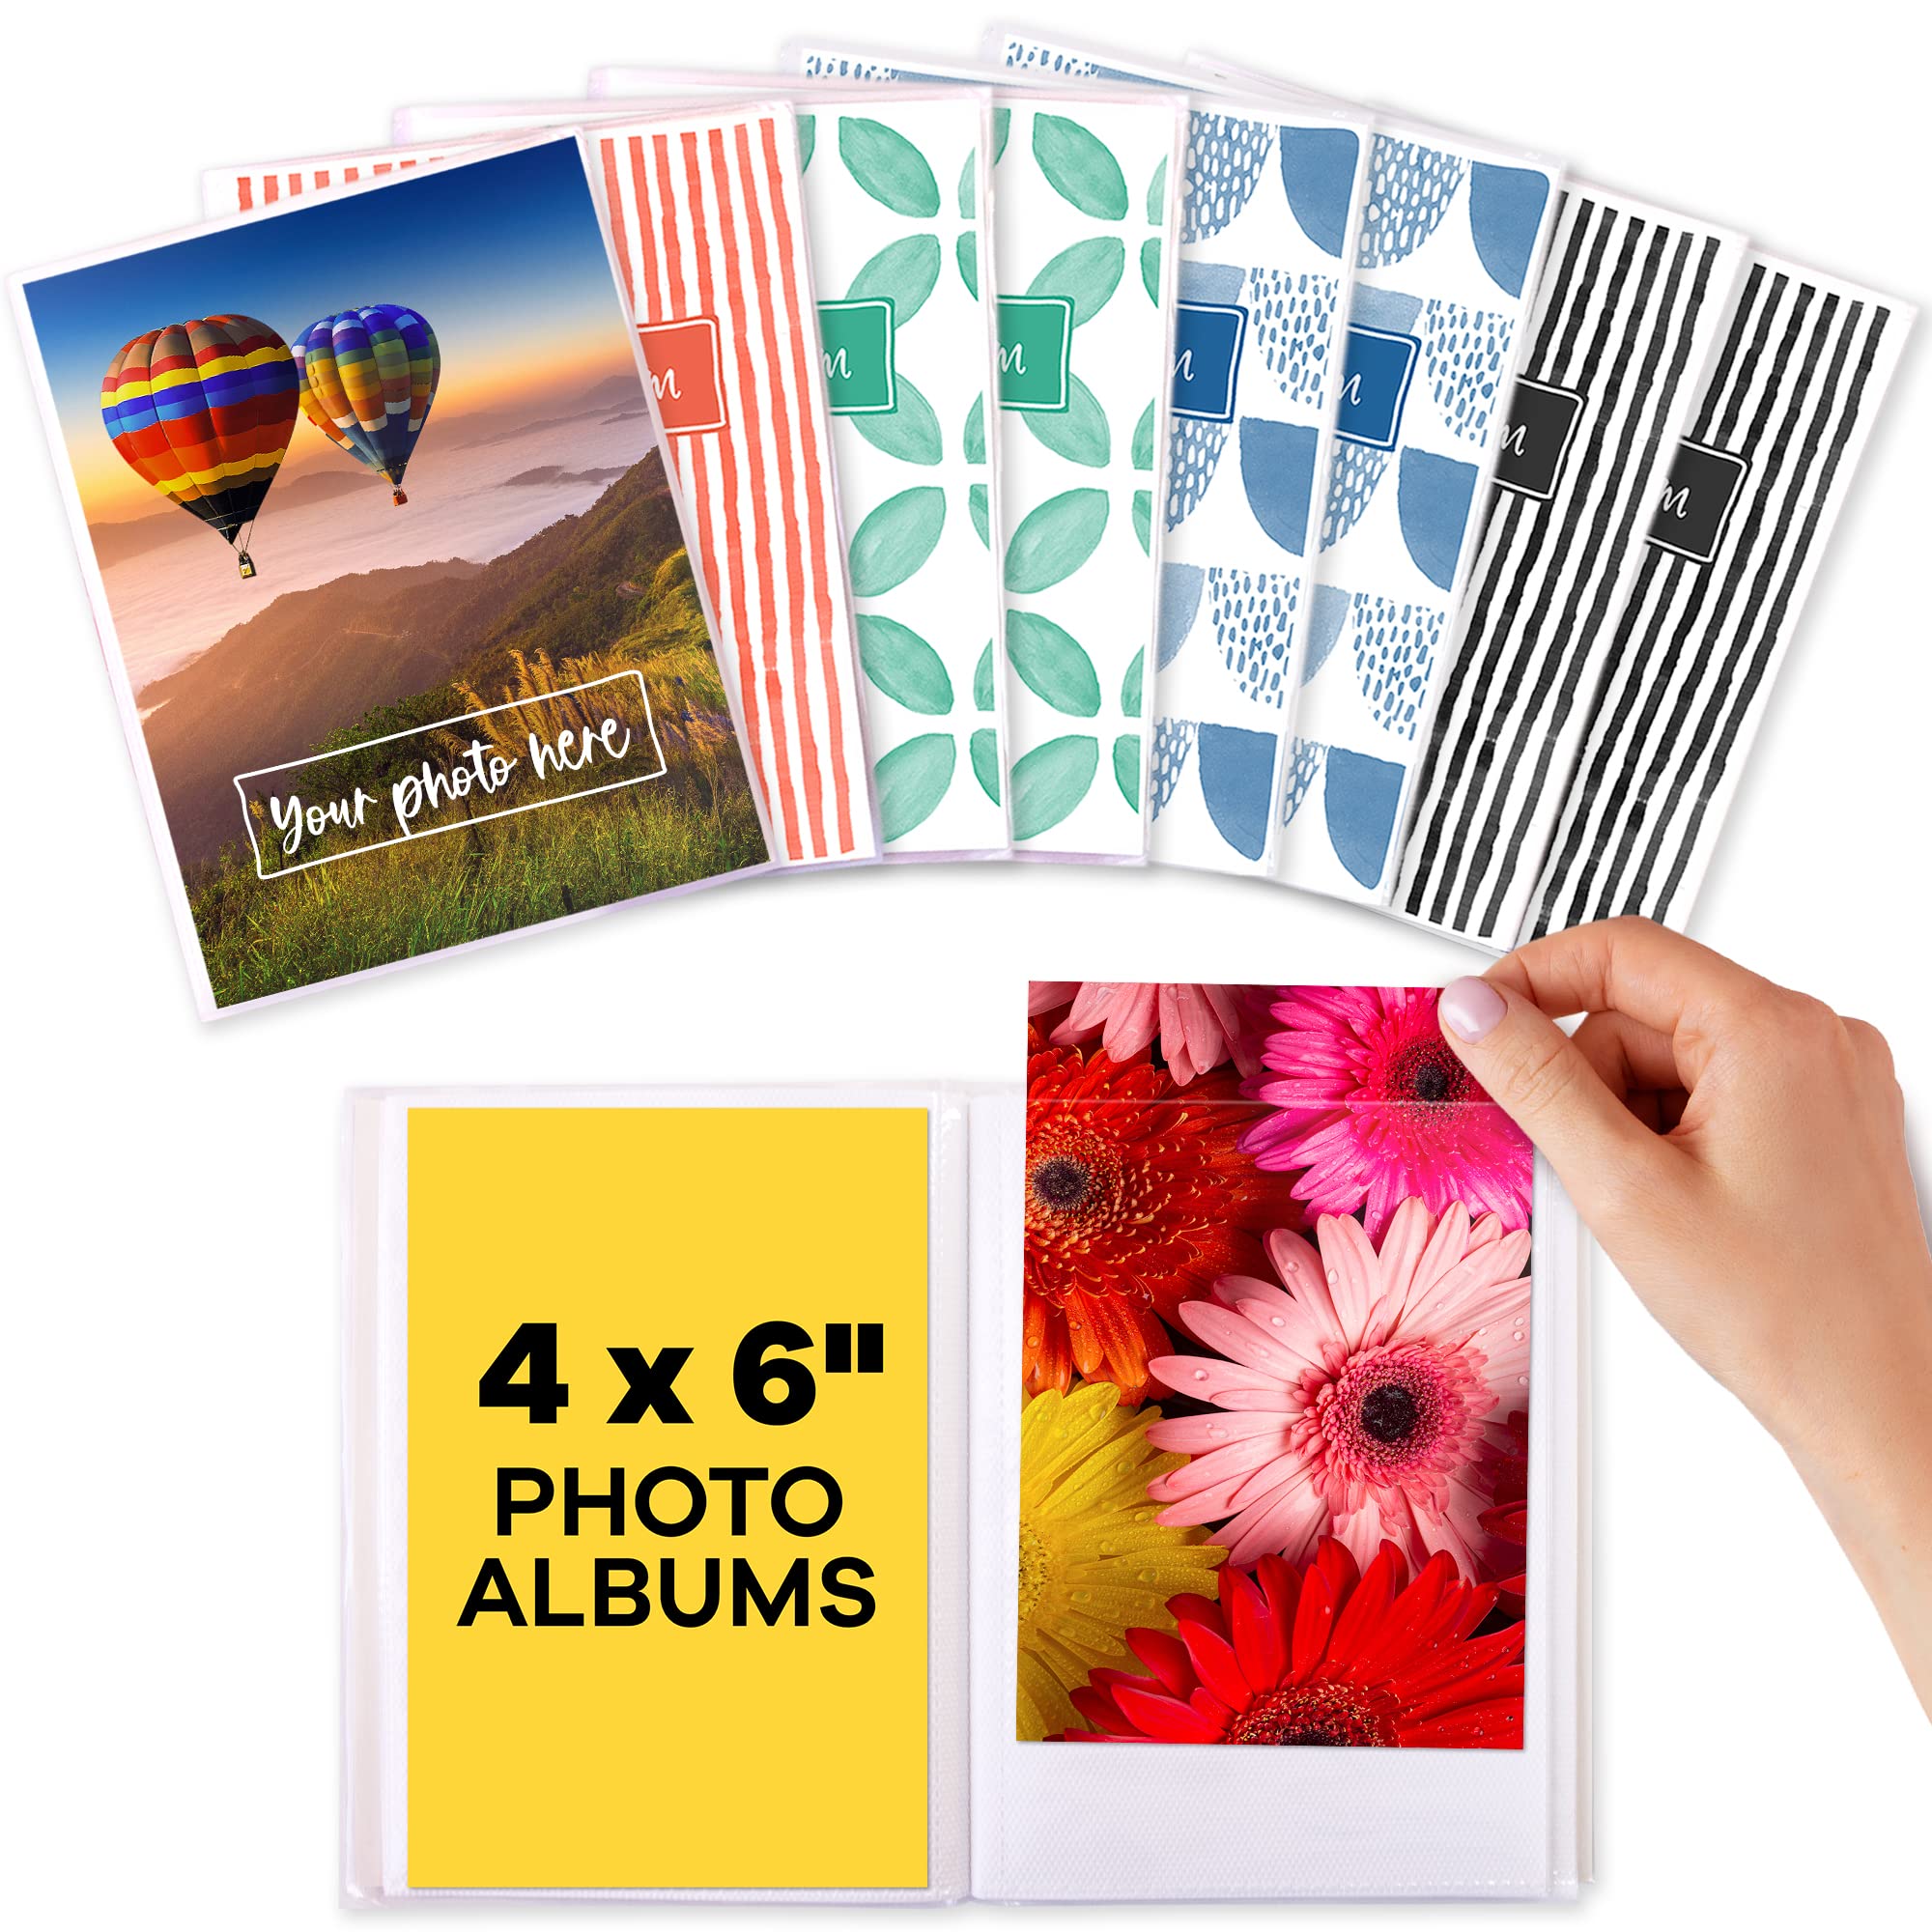 Paper Plan 4x6 Photo Albums - Photo Album 4x6 - Small Photo Album 4x6 - Small Photo Album (Set Of 8) Mini Photo Album - Photo Books for 4x6